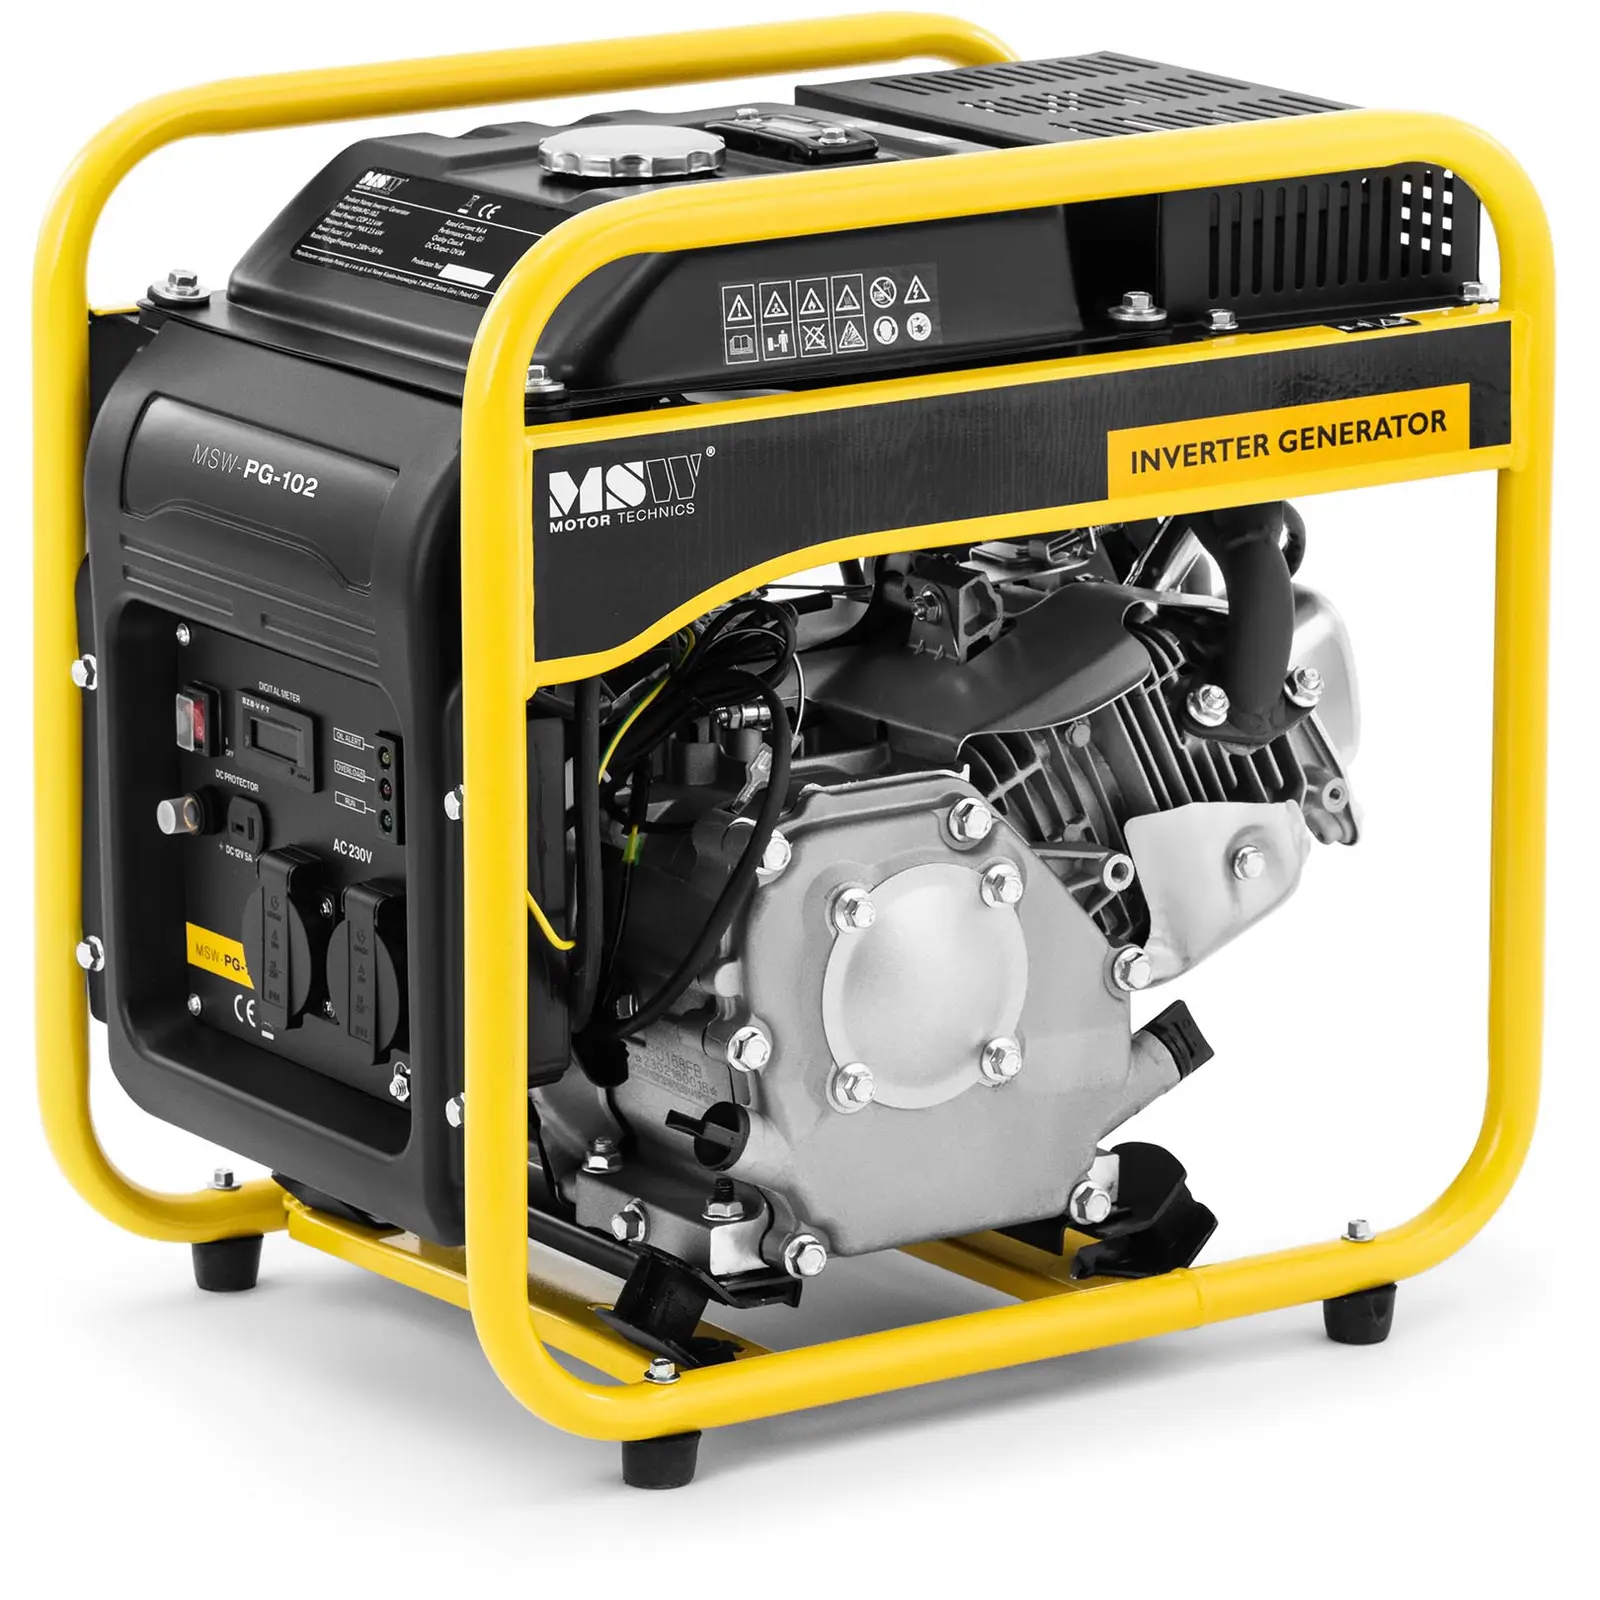 Inverter generator benzin - 3200 W - 230 V AC - startsnor